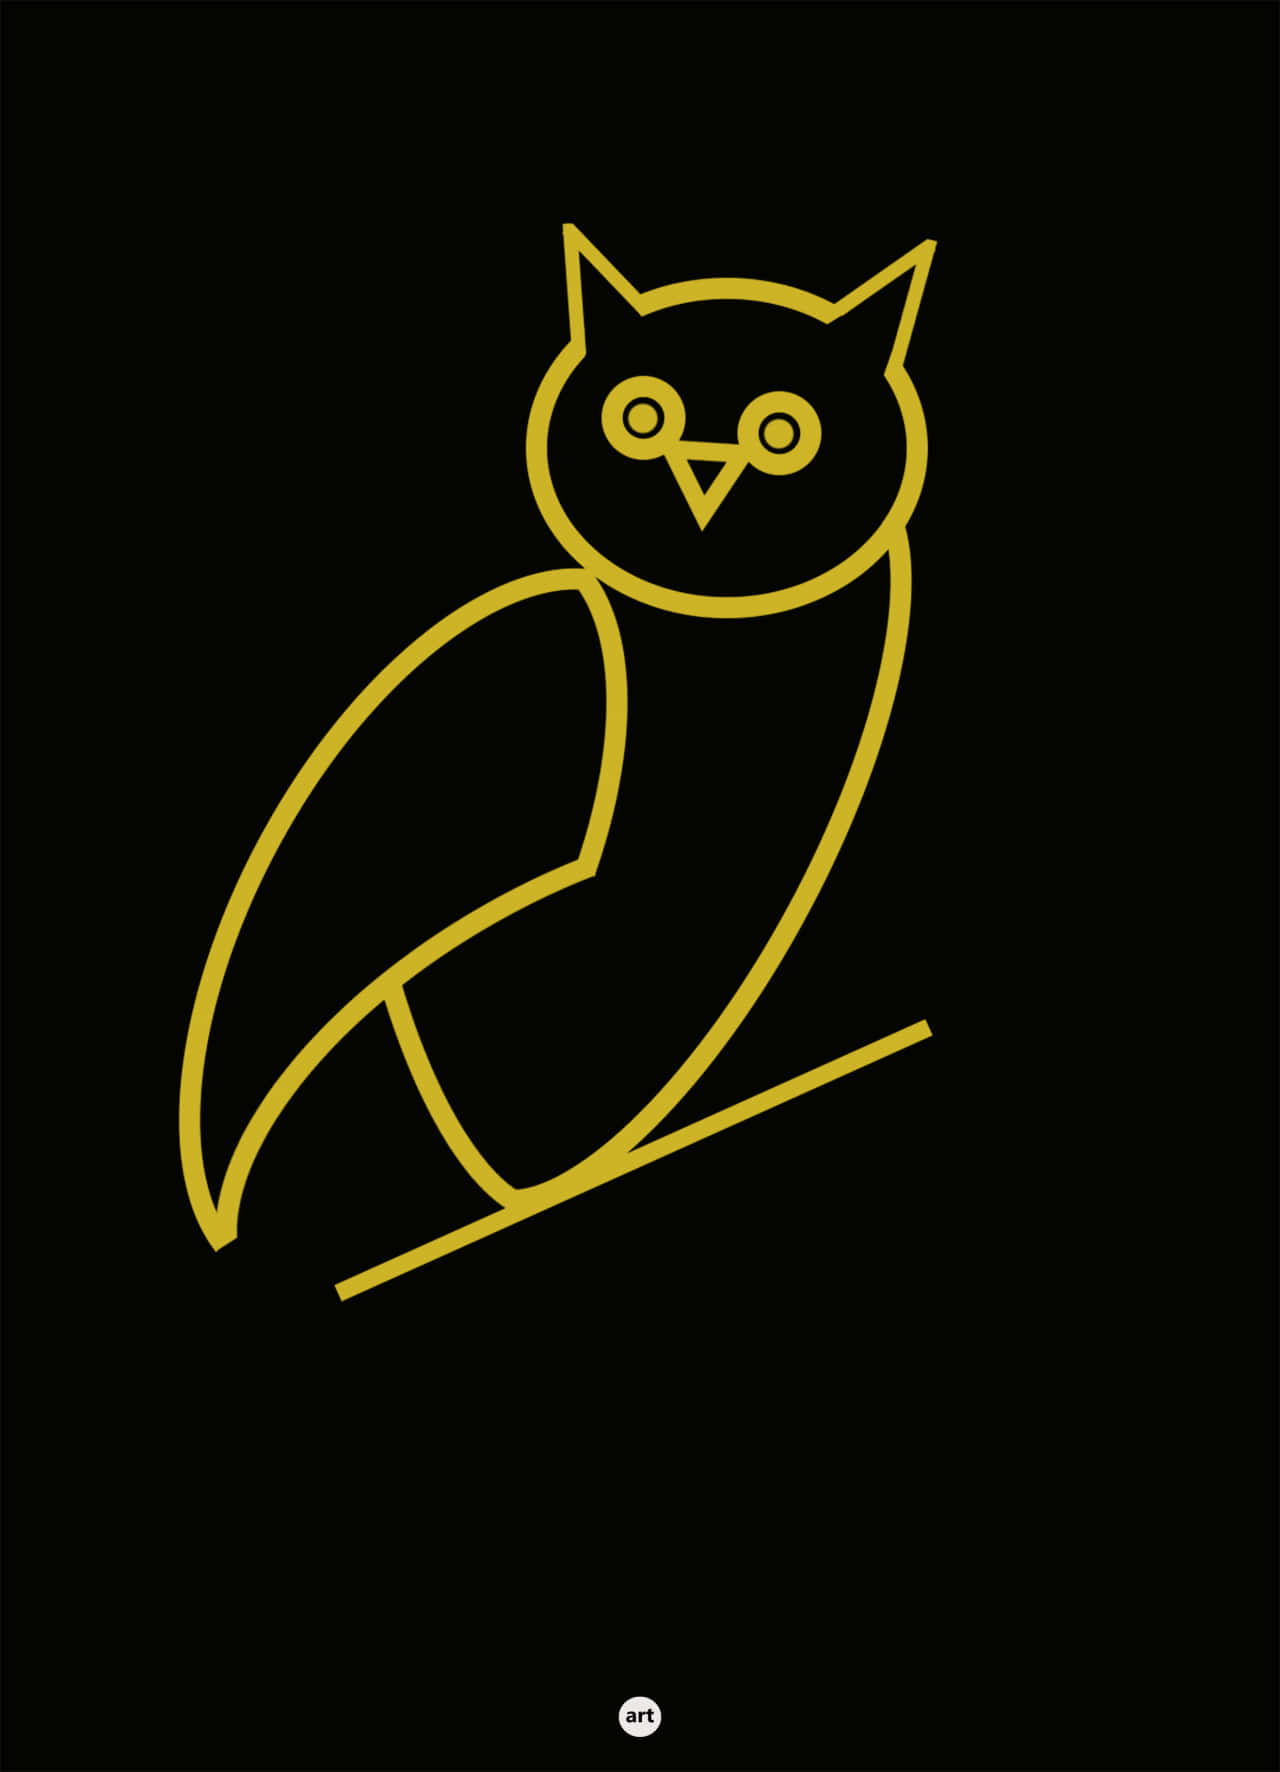 Download Drake Ovo Owl Iphone Wallpaper 